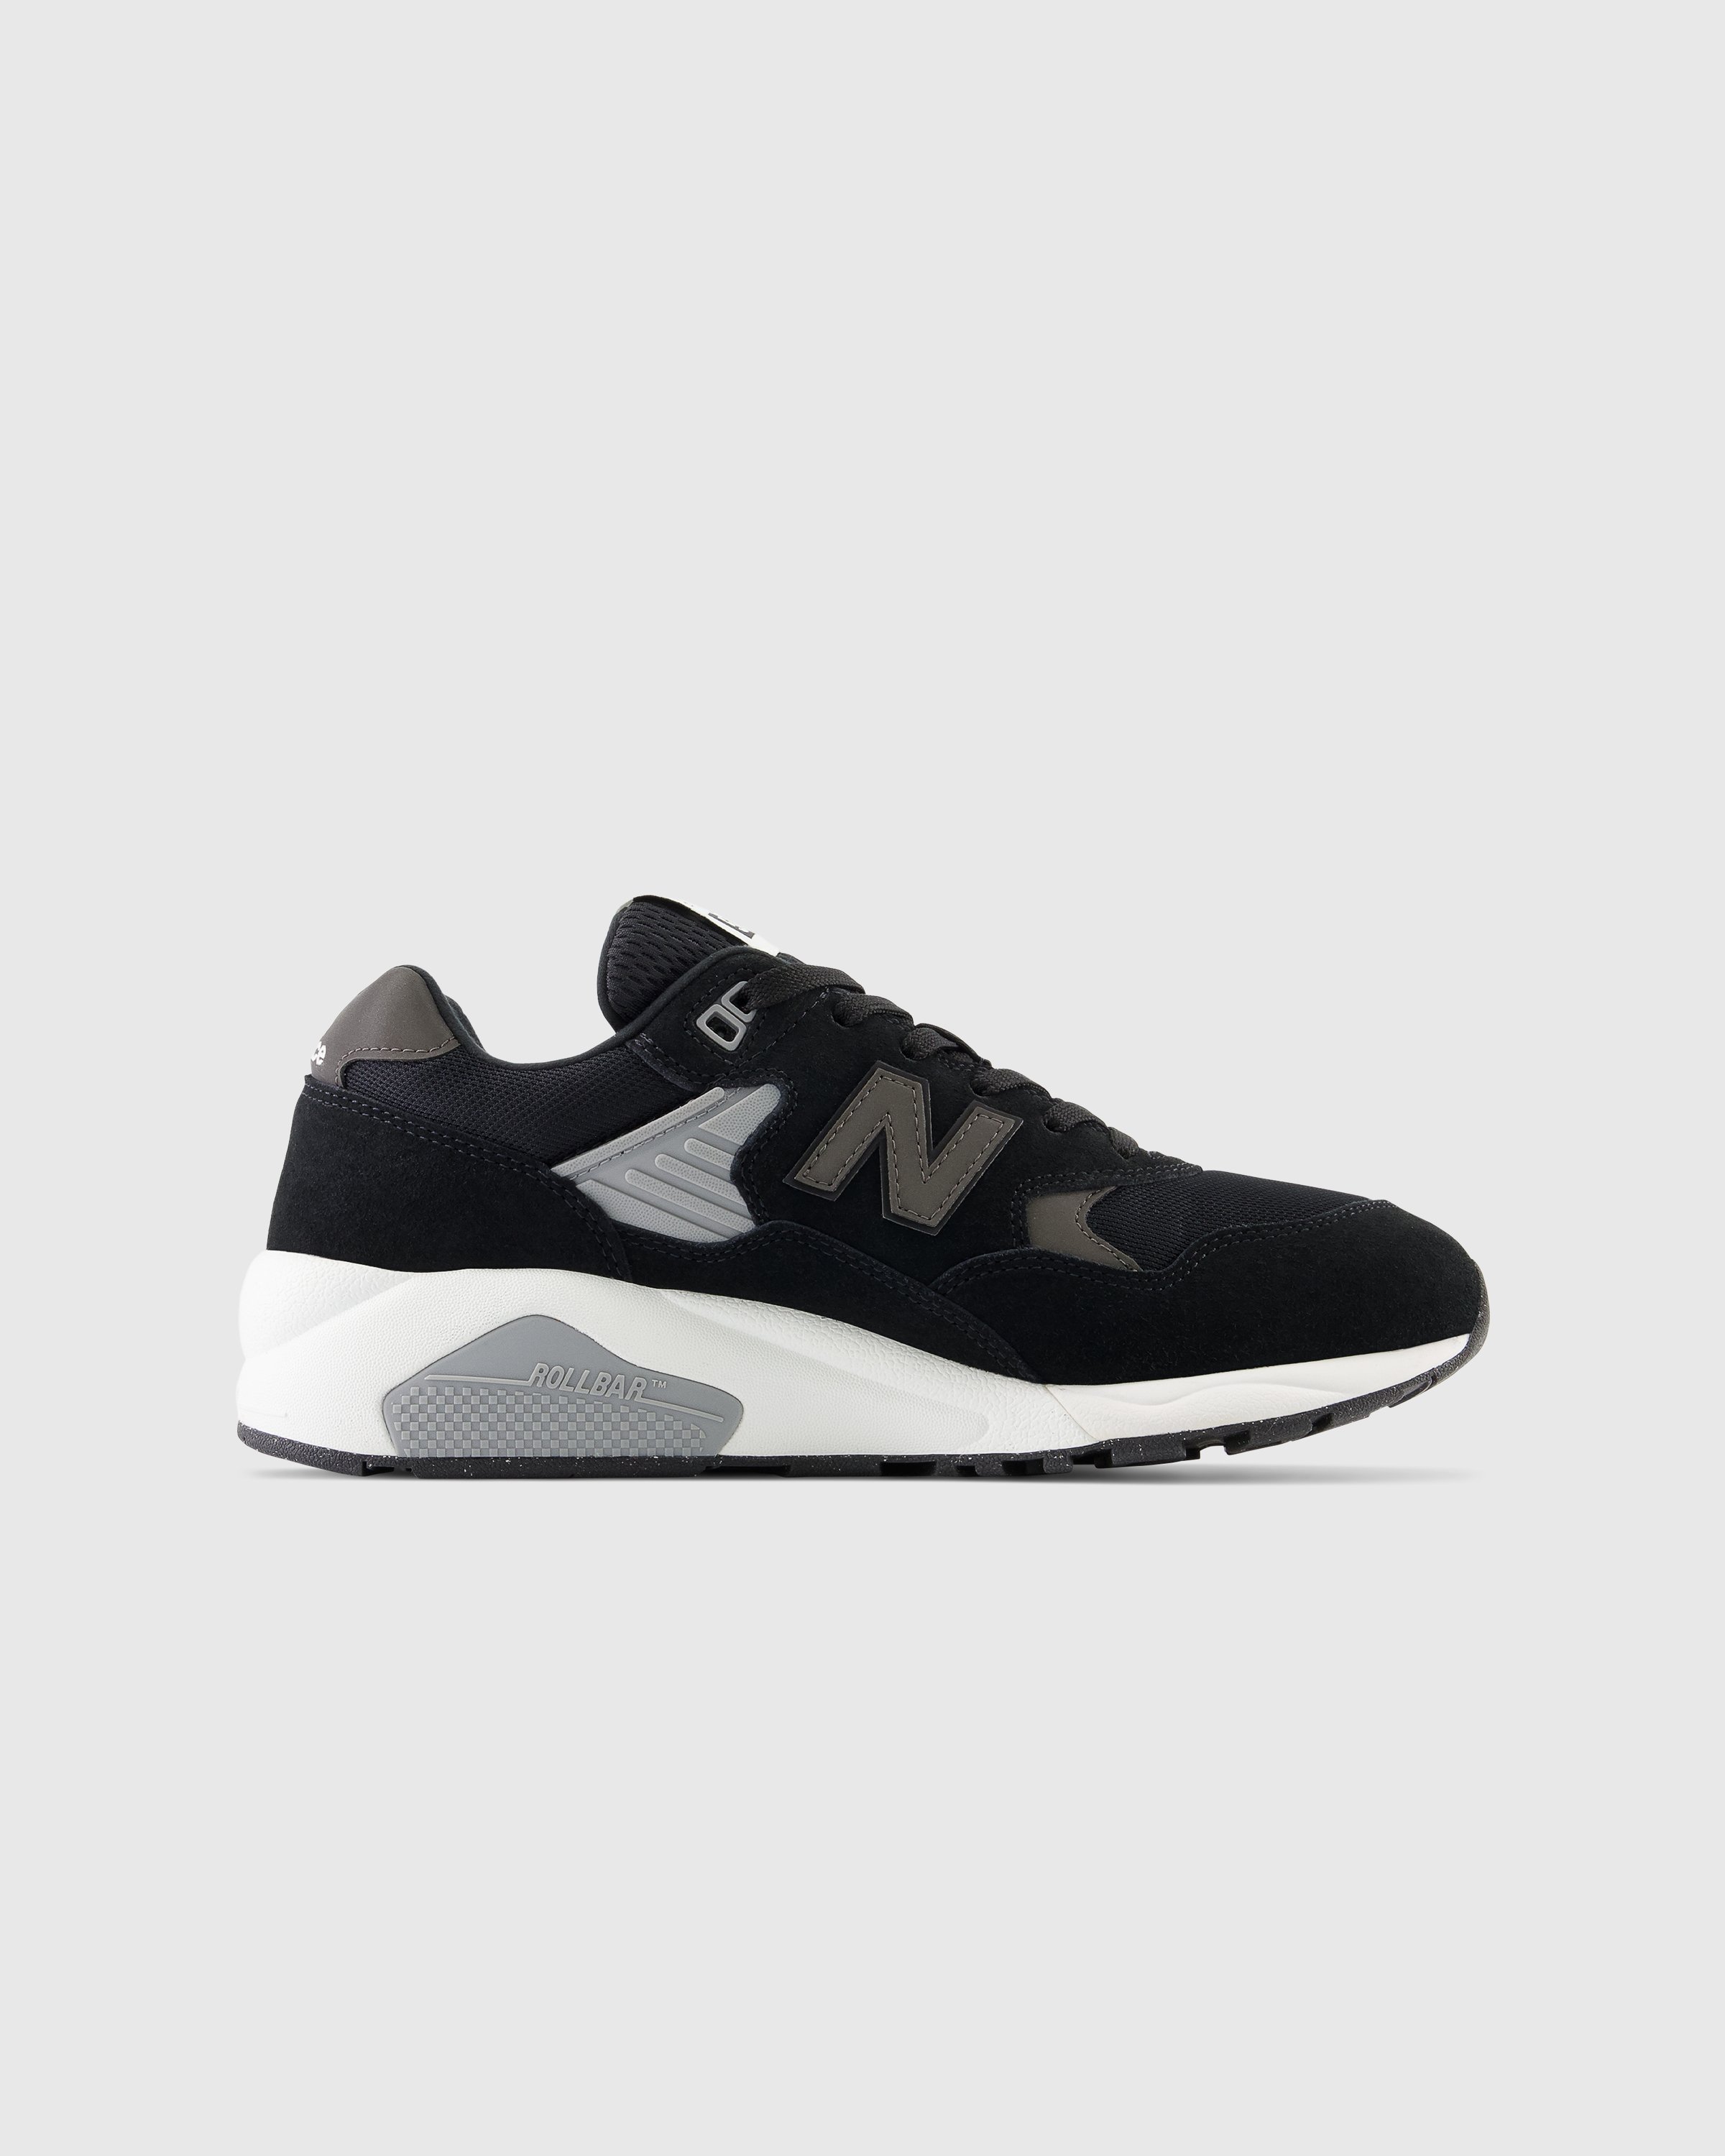 New Balance - 580 Black/Grey/White - Footwear - Black - Image 1